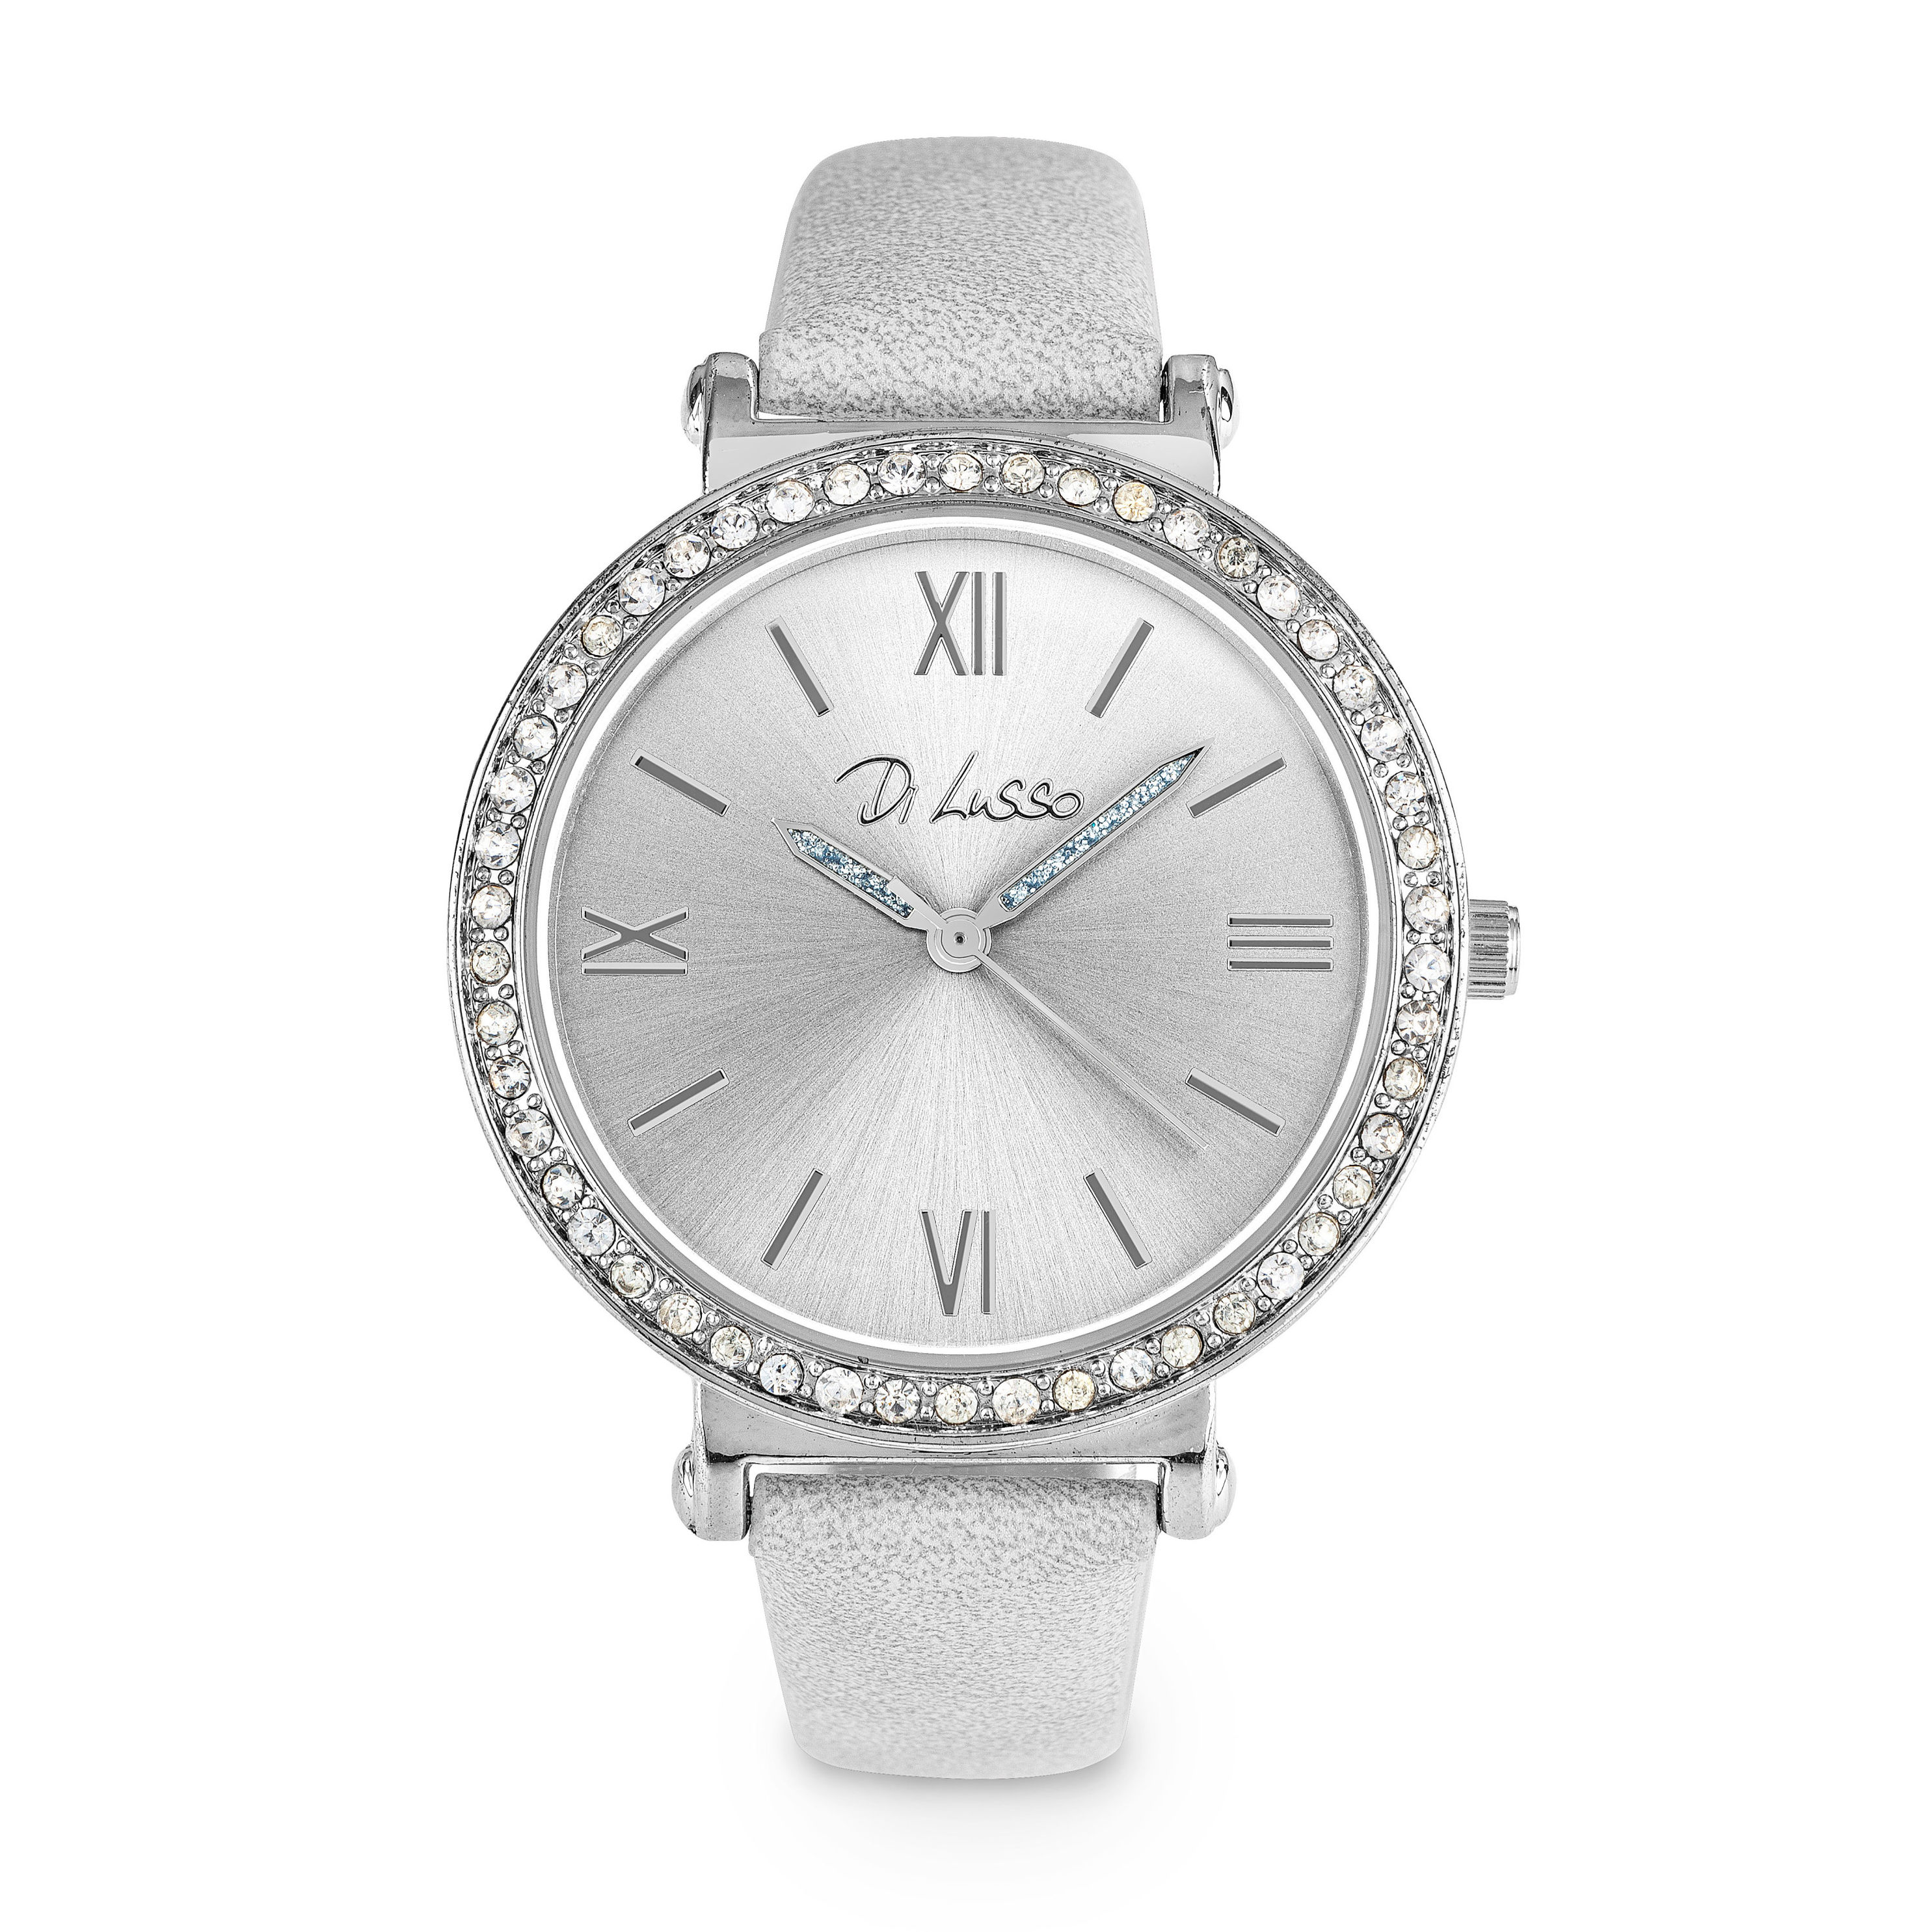 DL Armbanduhr Glamour Farbe: silber bestellen | Weltbild.de